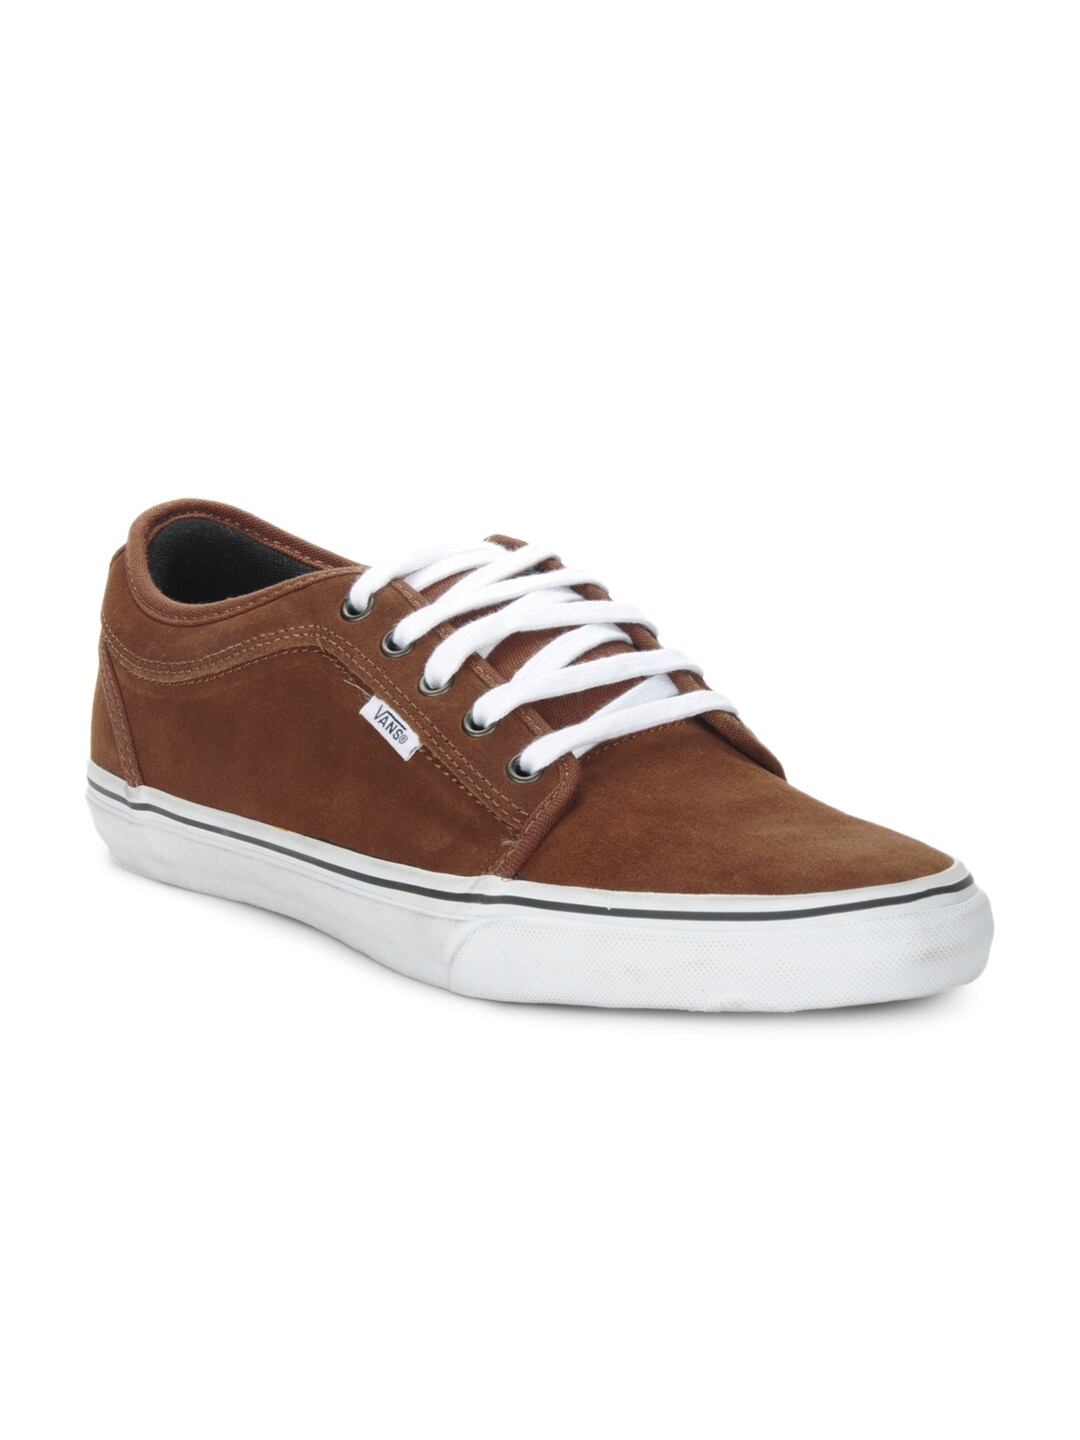 Vans Men Brown Casual Shoes